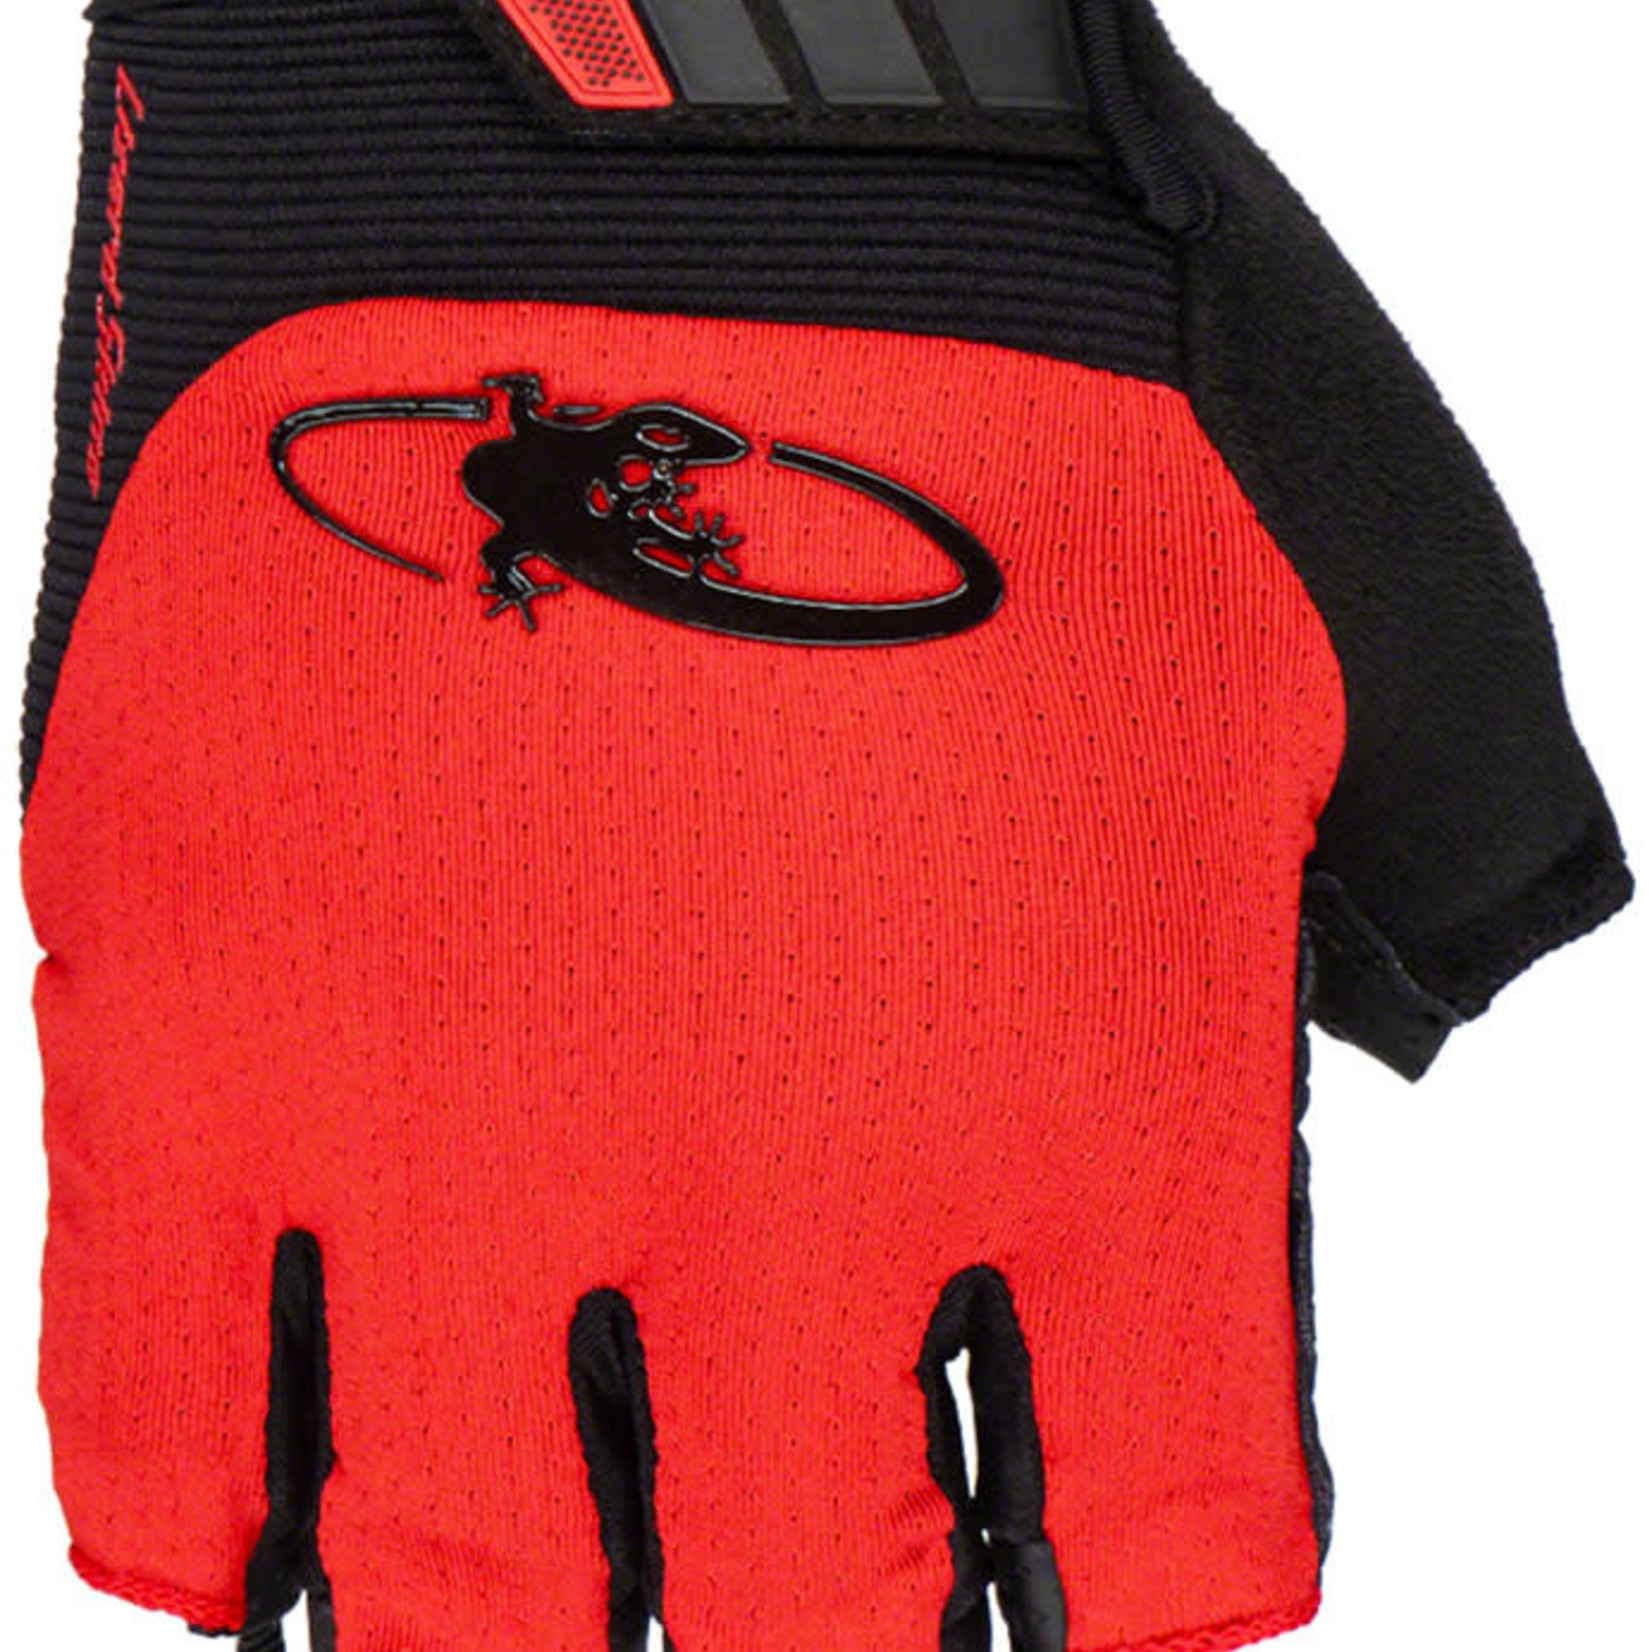 LIZARD SKINS Lizard Skins Aramus Cadence Gloves - Crimson Red Short Finger 2X-Large